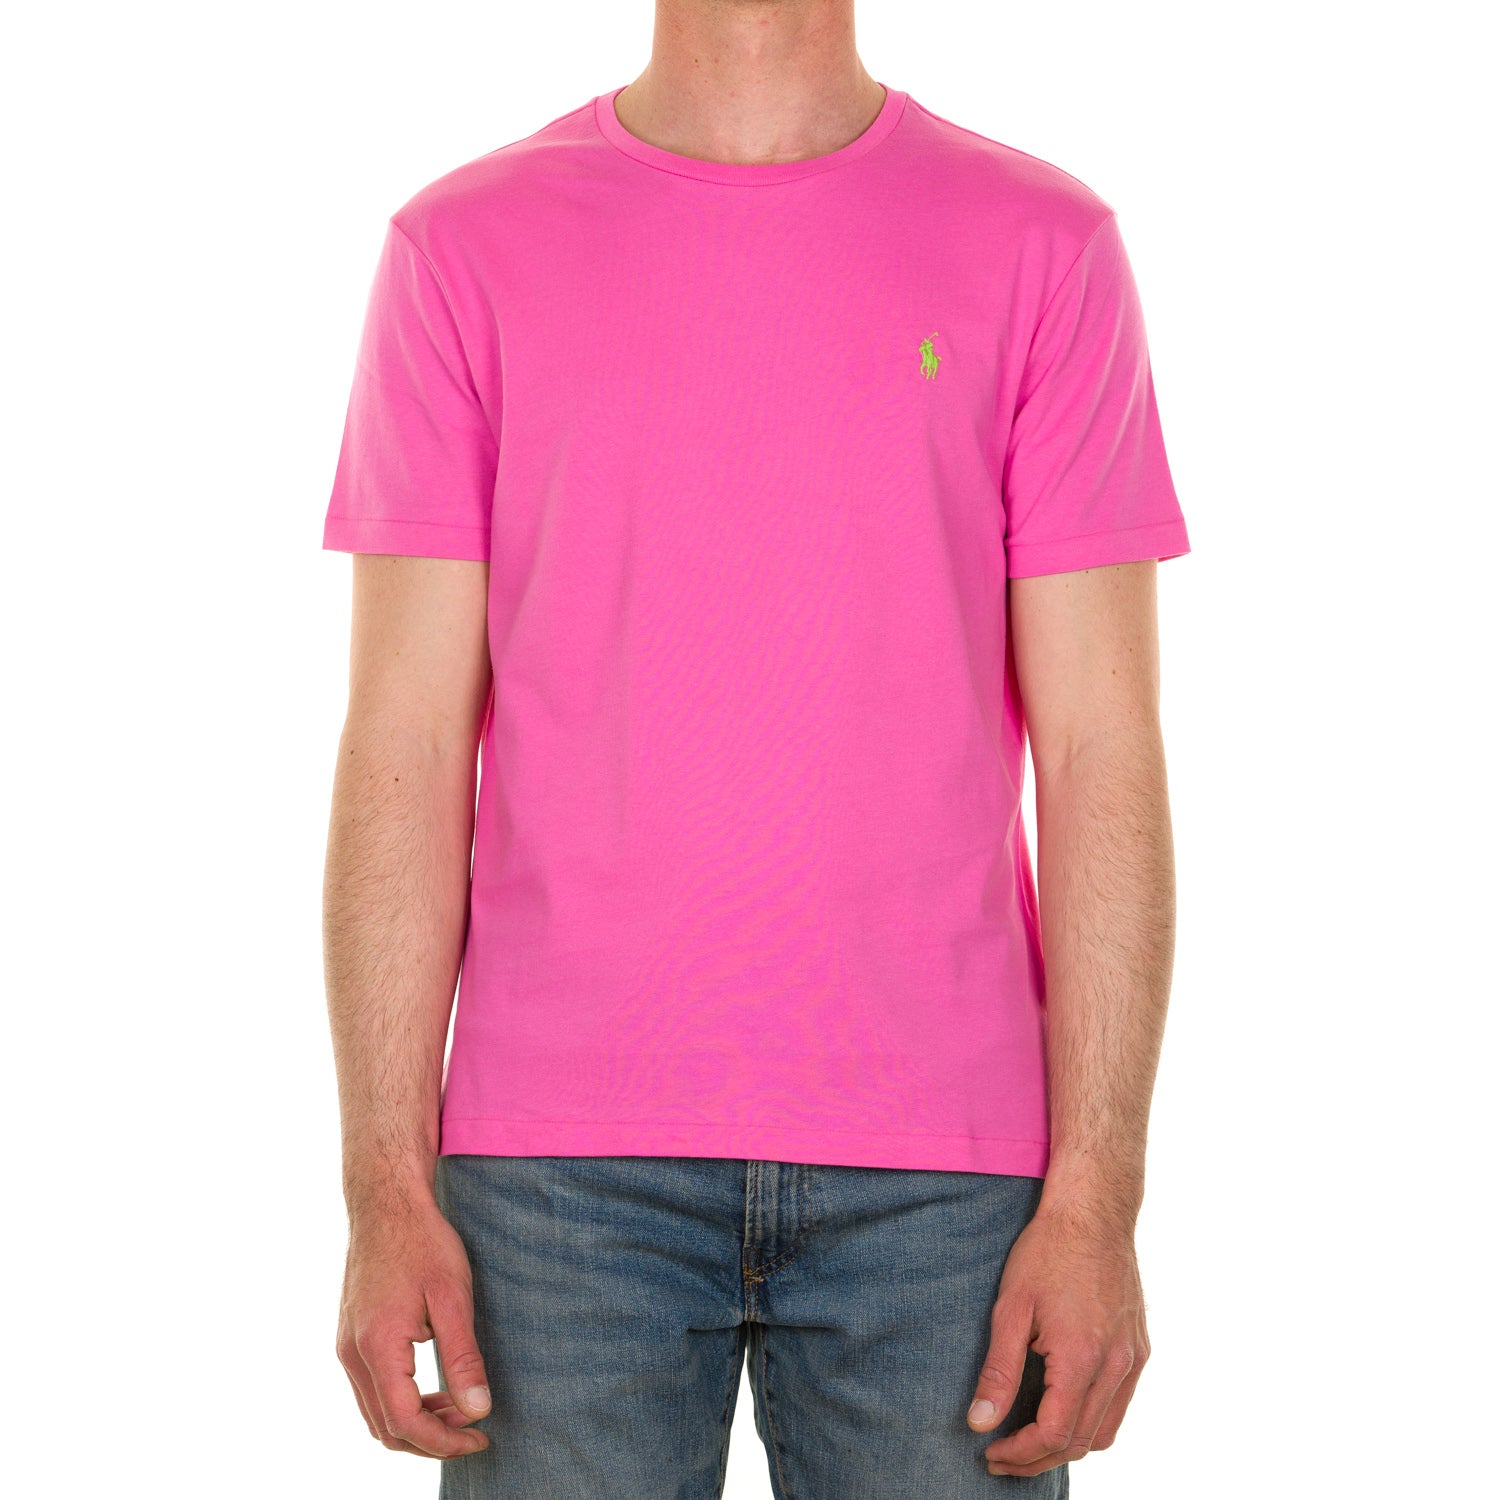 T-shirt POLO RALPH LAUREN 219 710671438 Maui pink - Avant-gardeandria